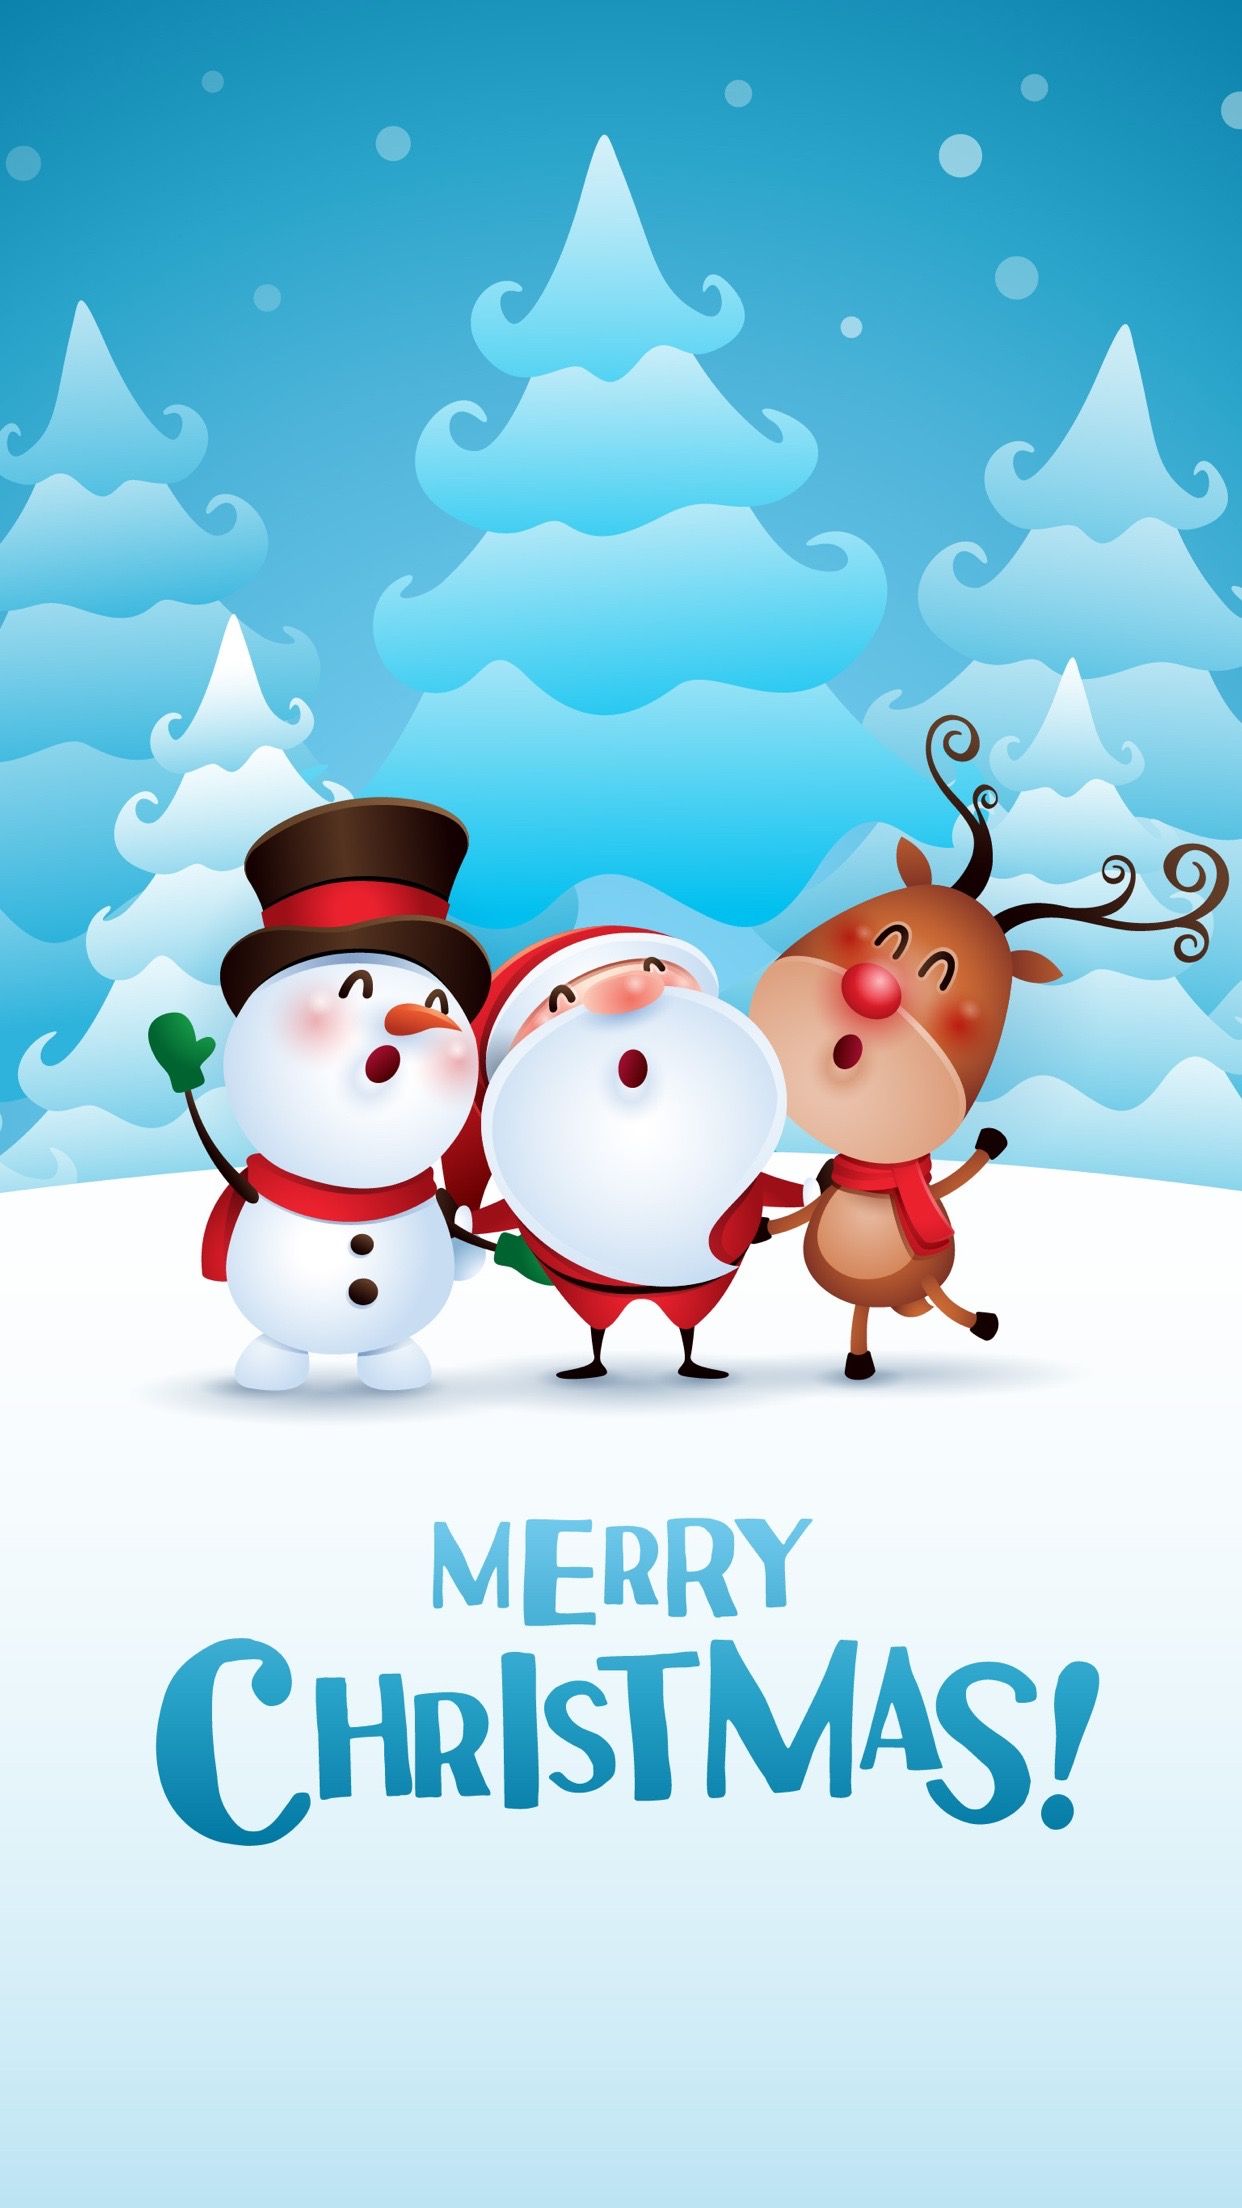 Xmas Images To Download Free : Christmas Xmas Holidays | Bodesewasude